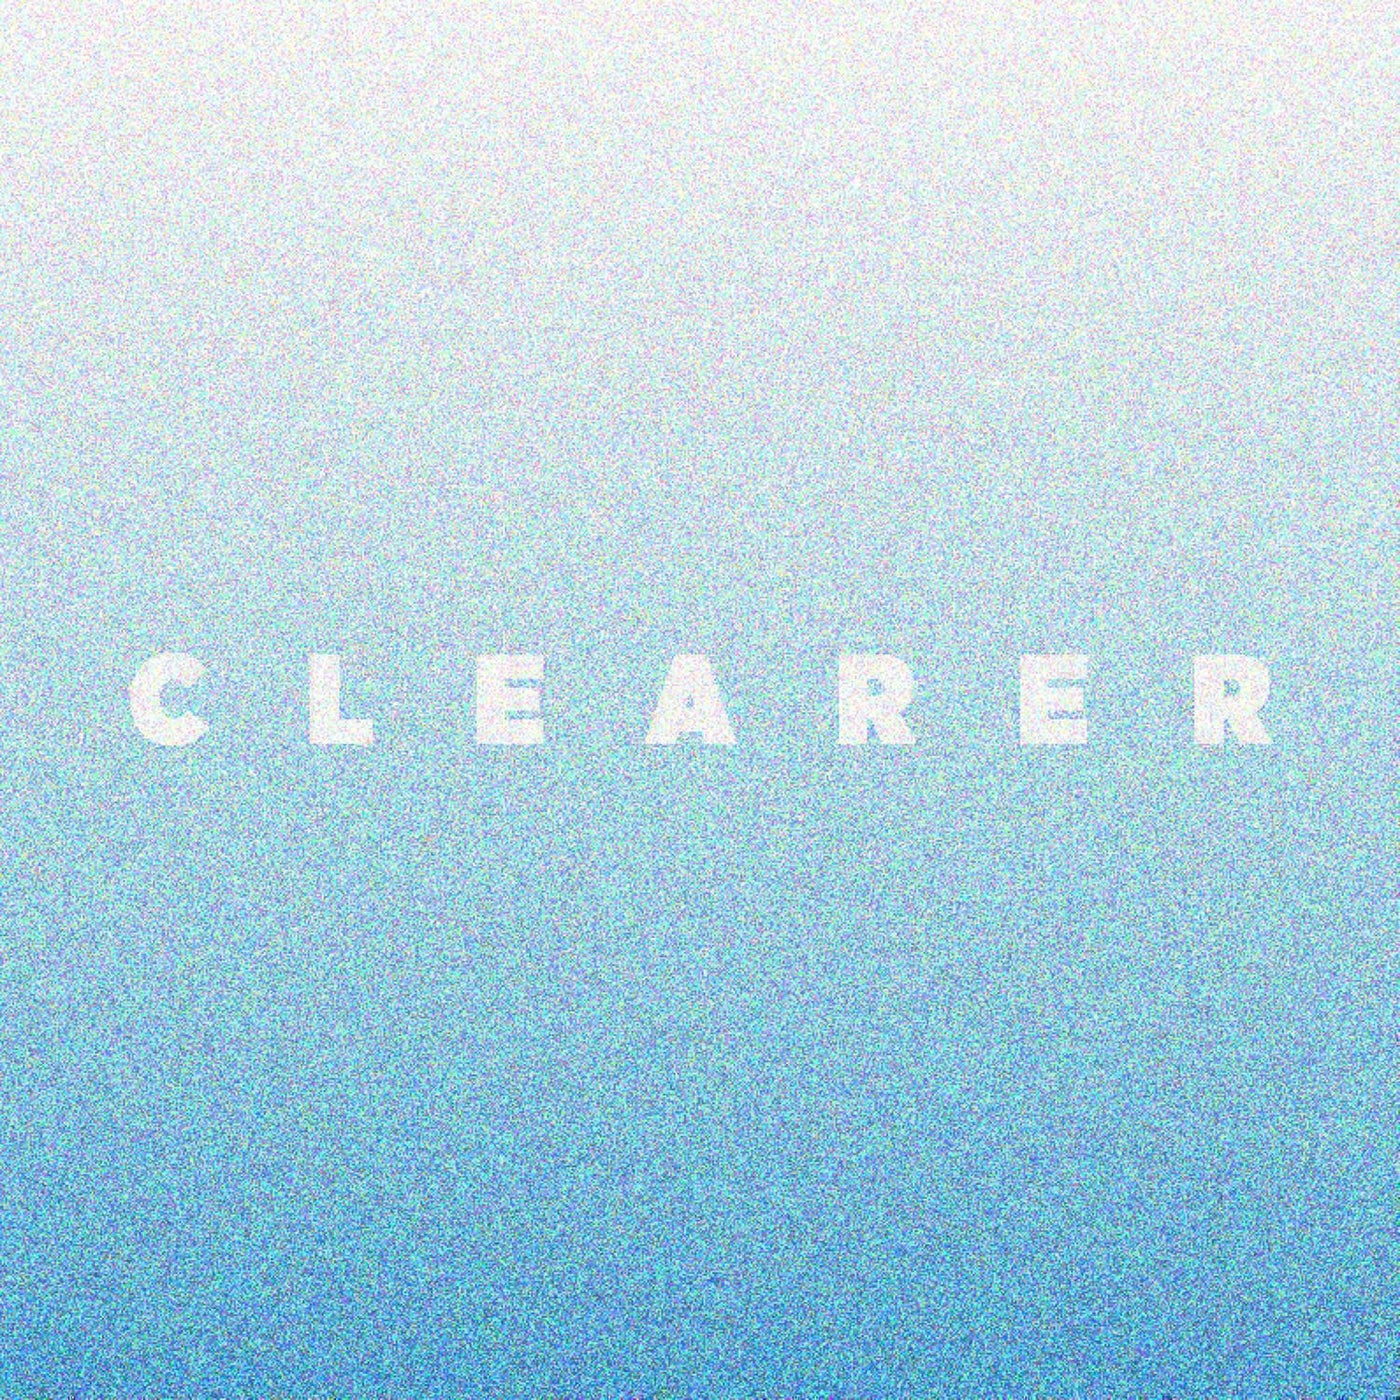 Clearer